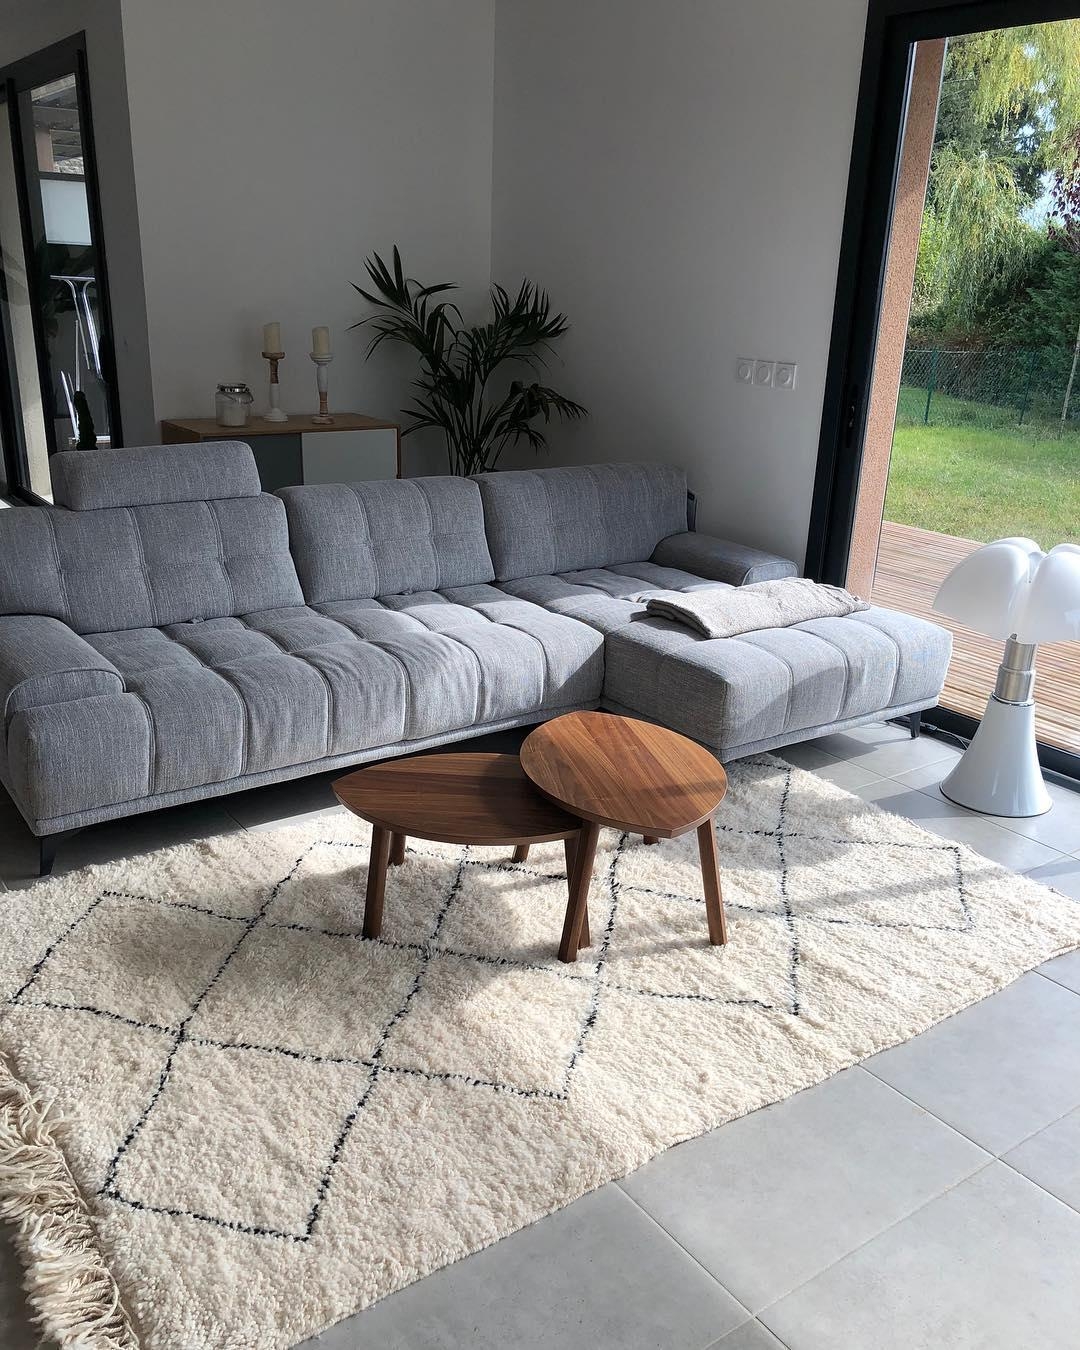 Livingroom inspiration
#couch #rug #beniourain 